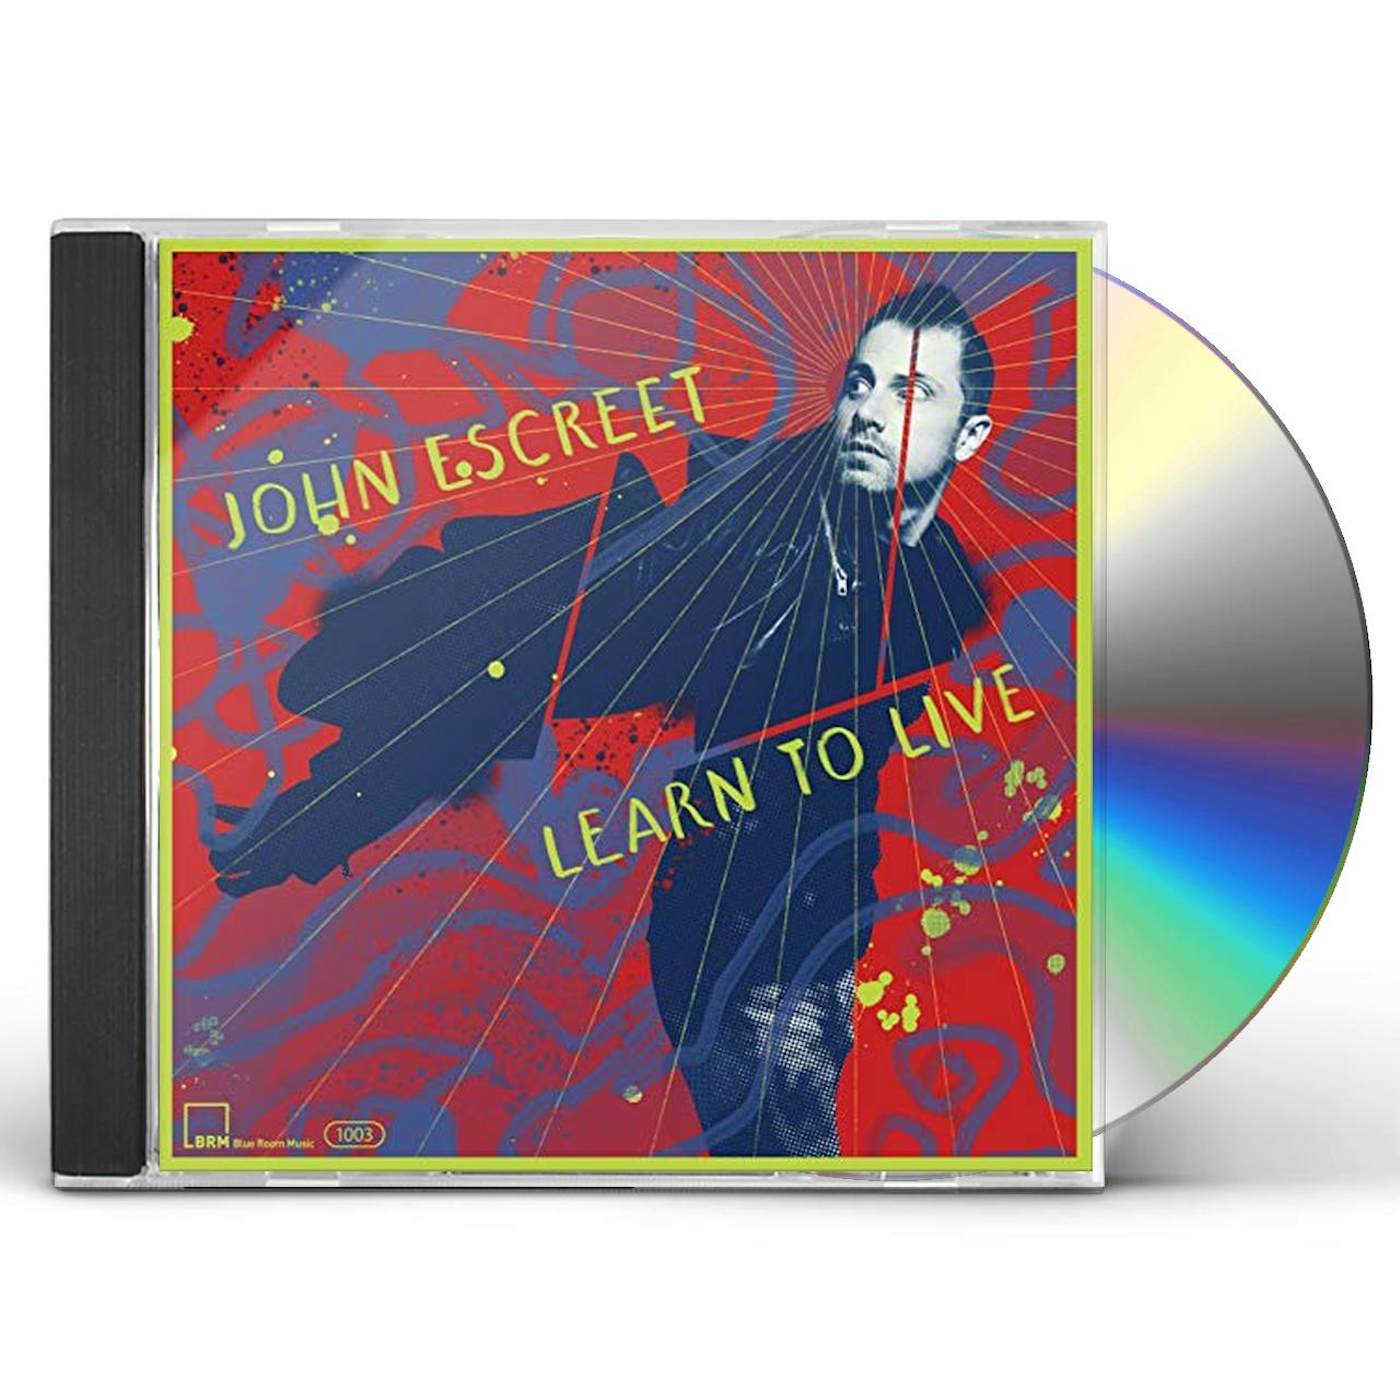 John Escreet Learn To Live CD